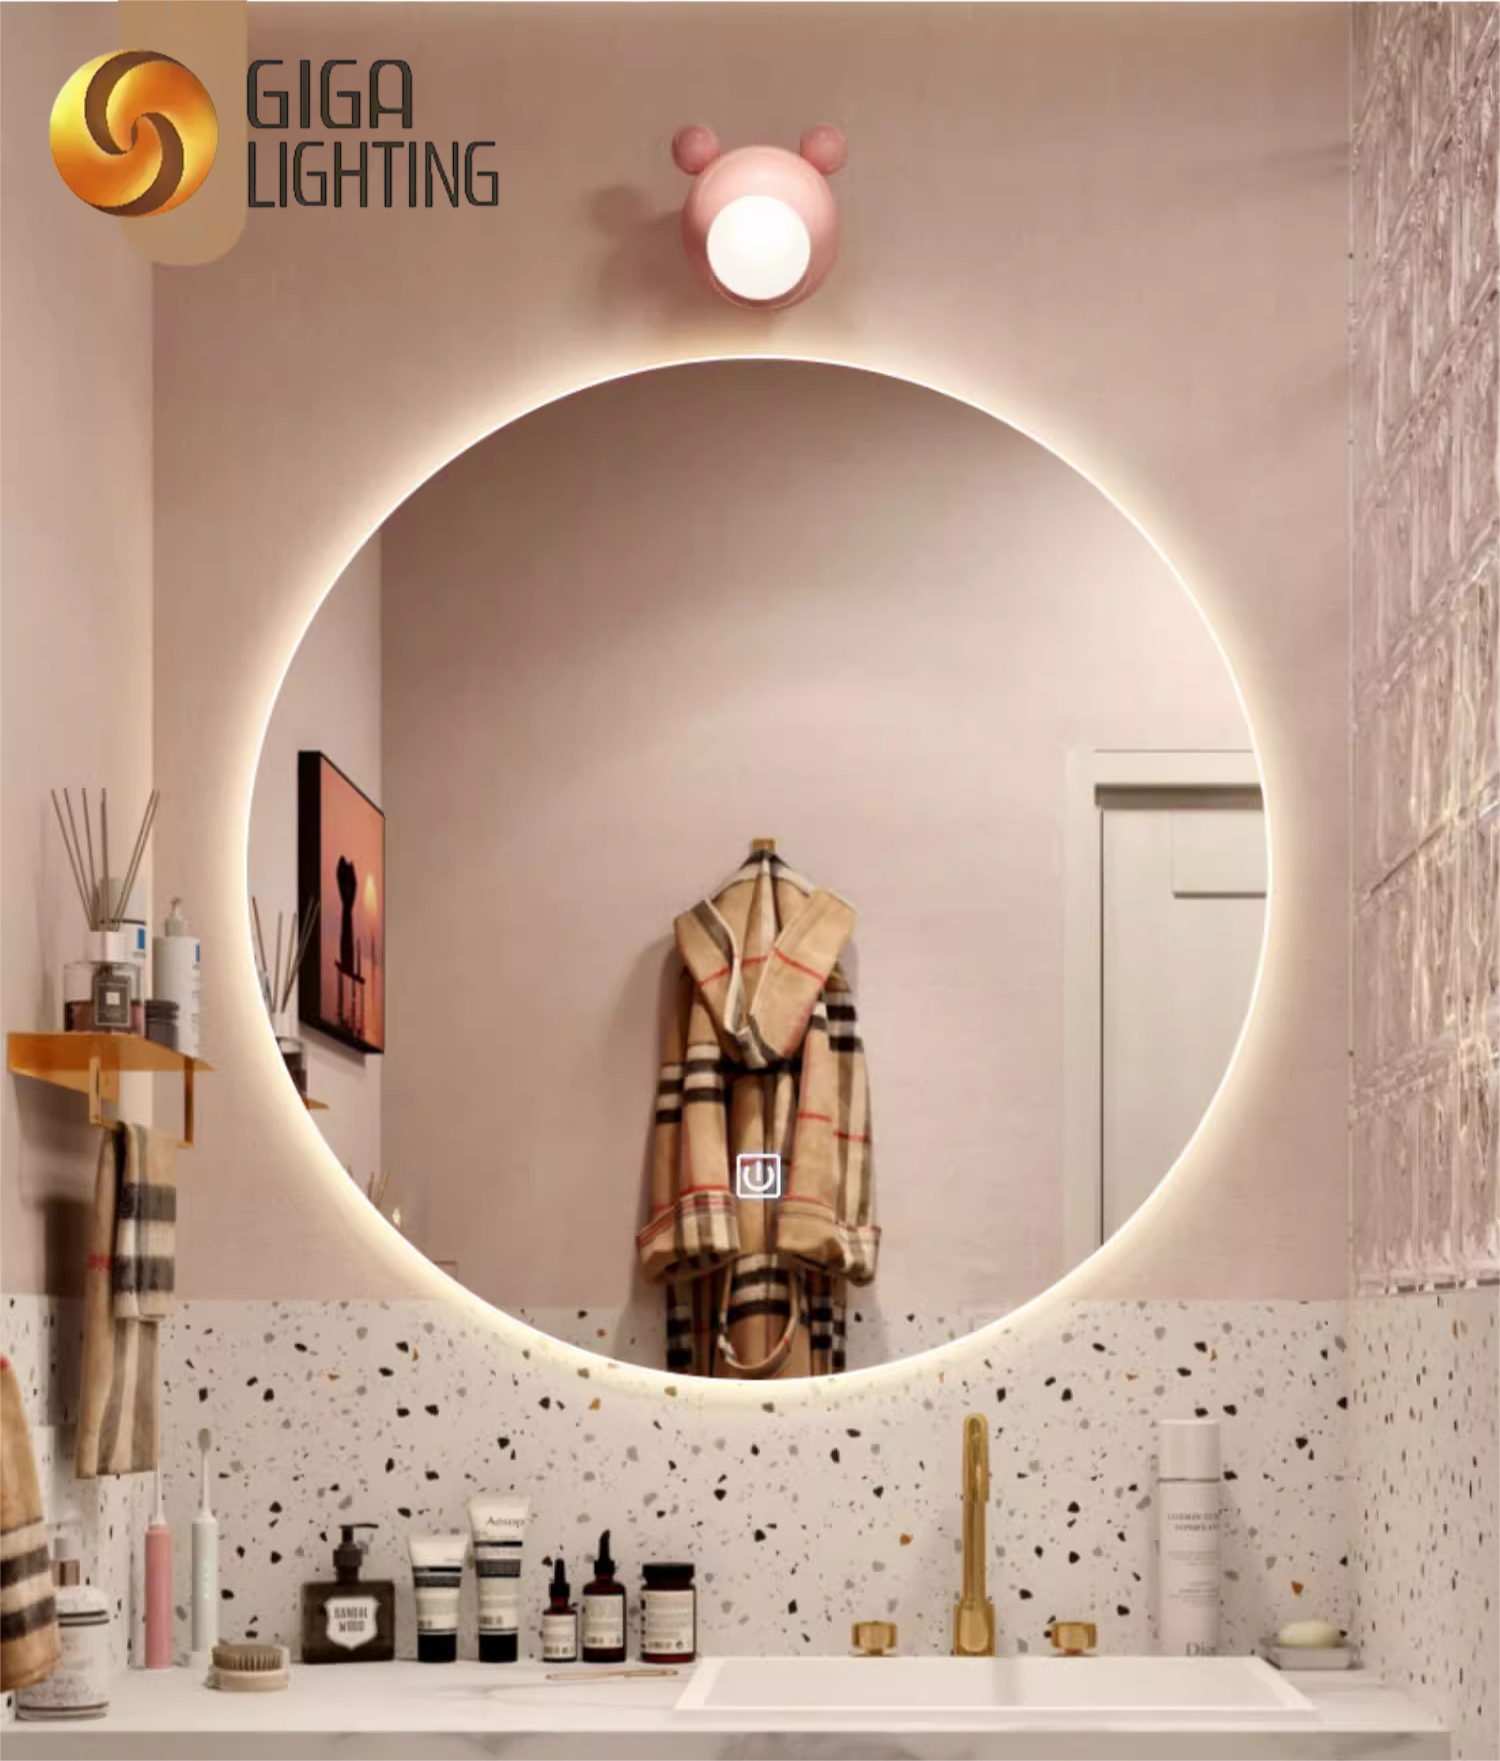 CB EMC WaterProof IP44 Mirror with led light Wall Mounted Bathroom Mirror Toilet